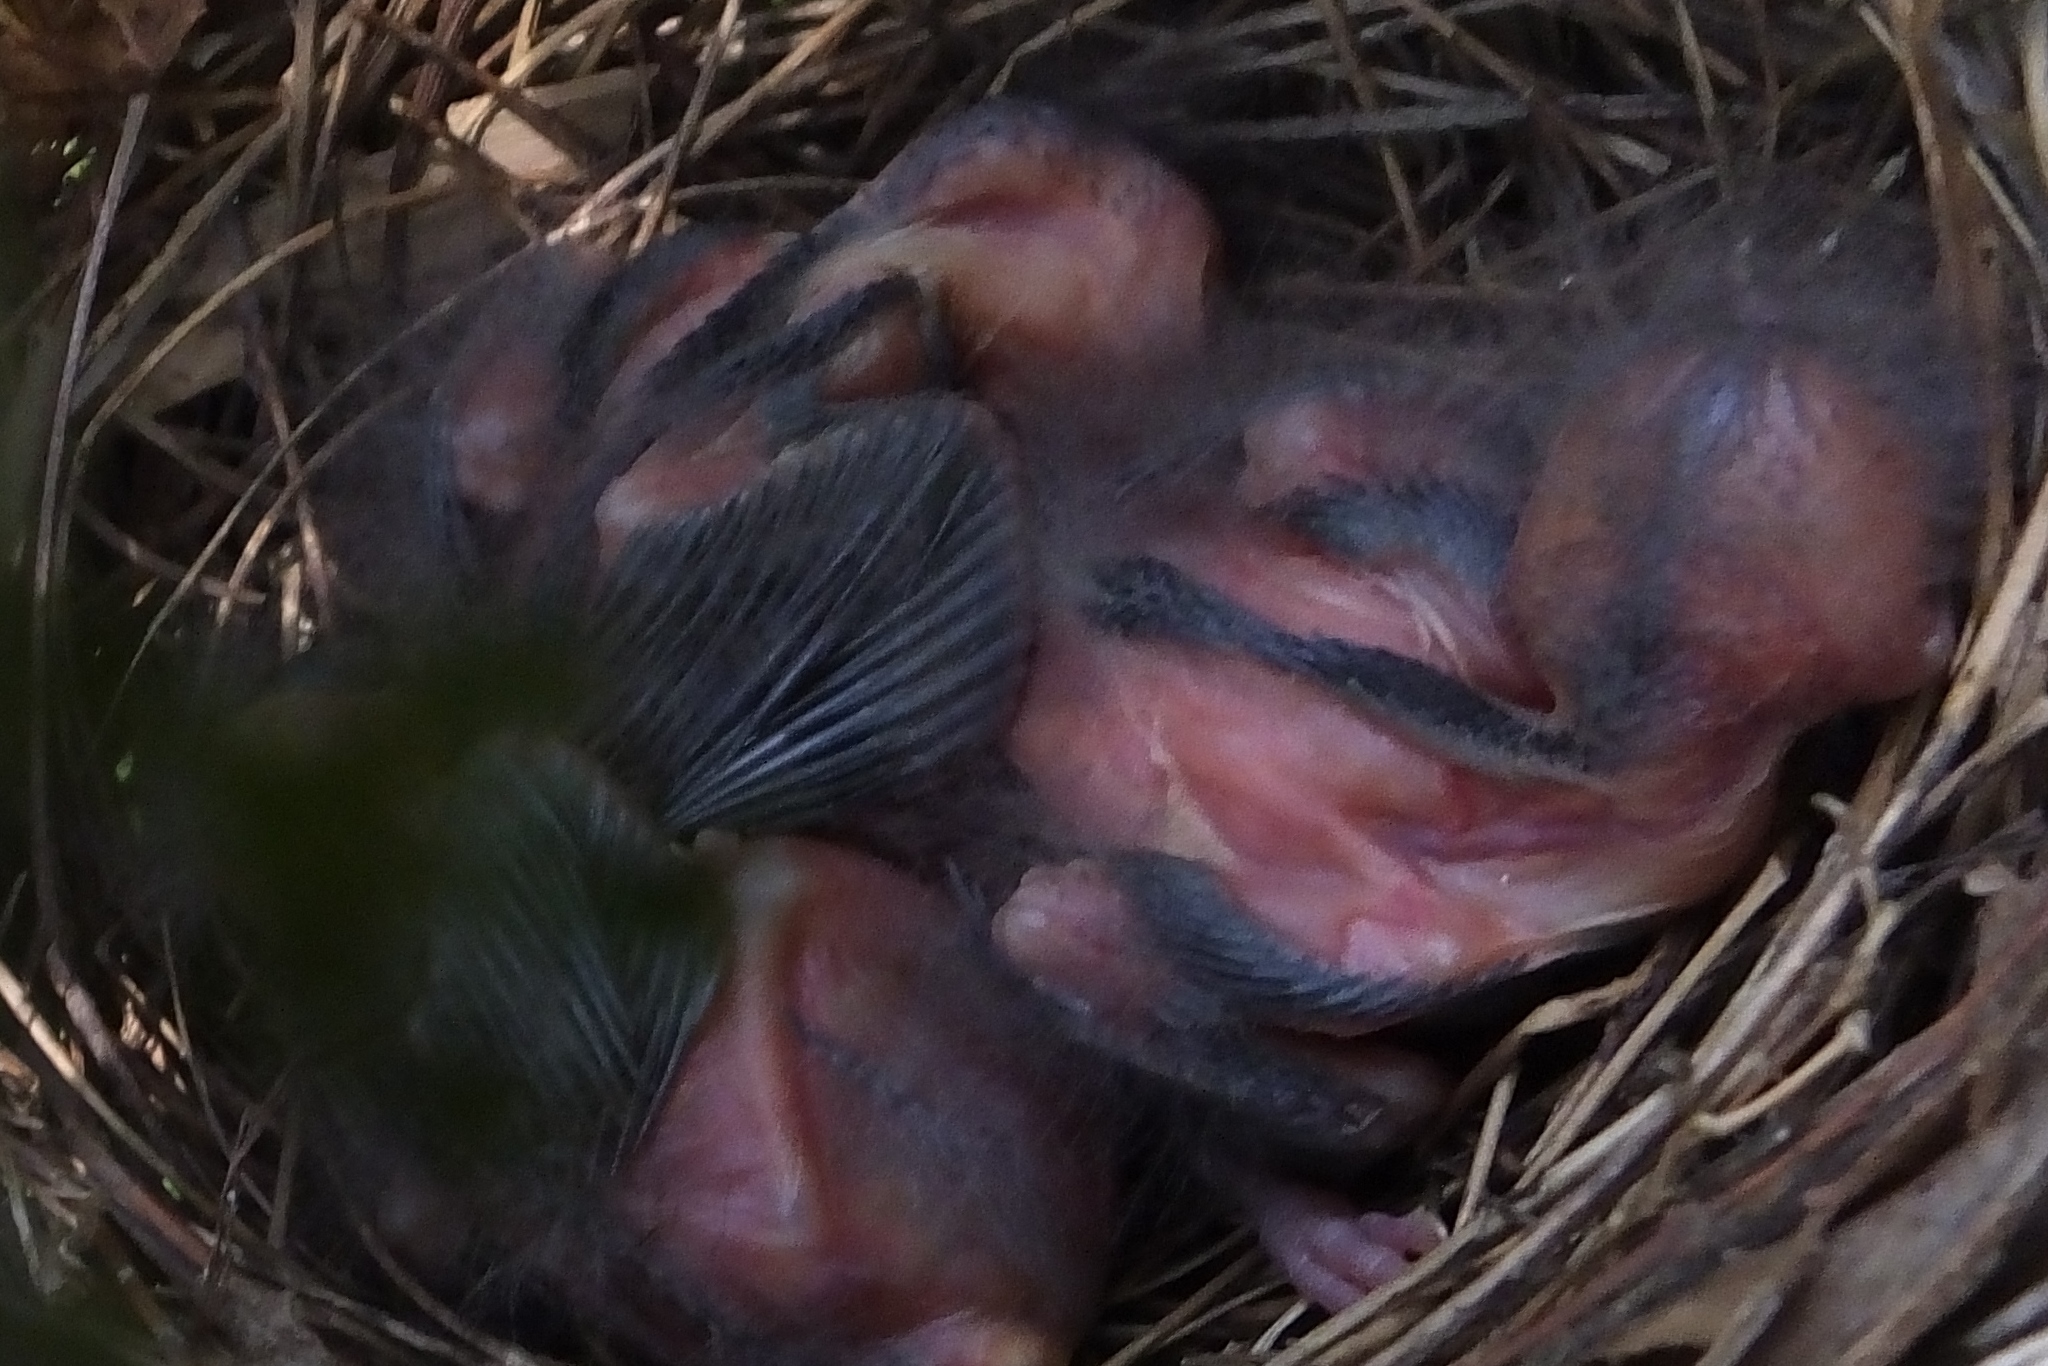 baby cardinal in nest